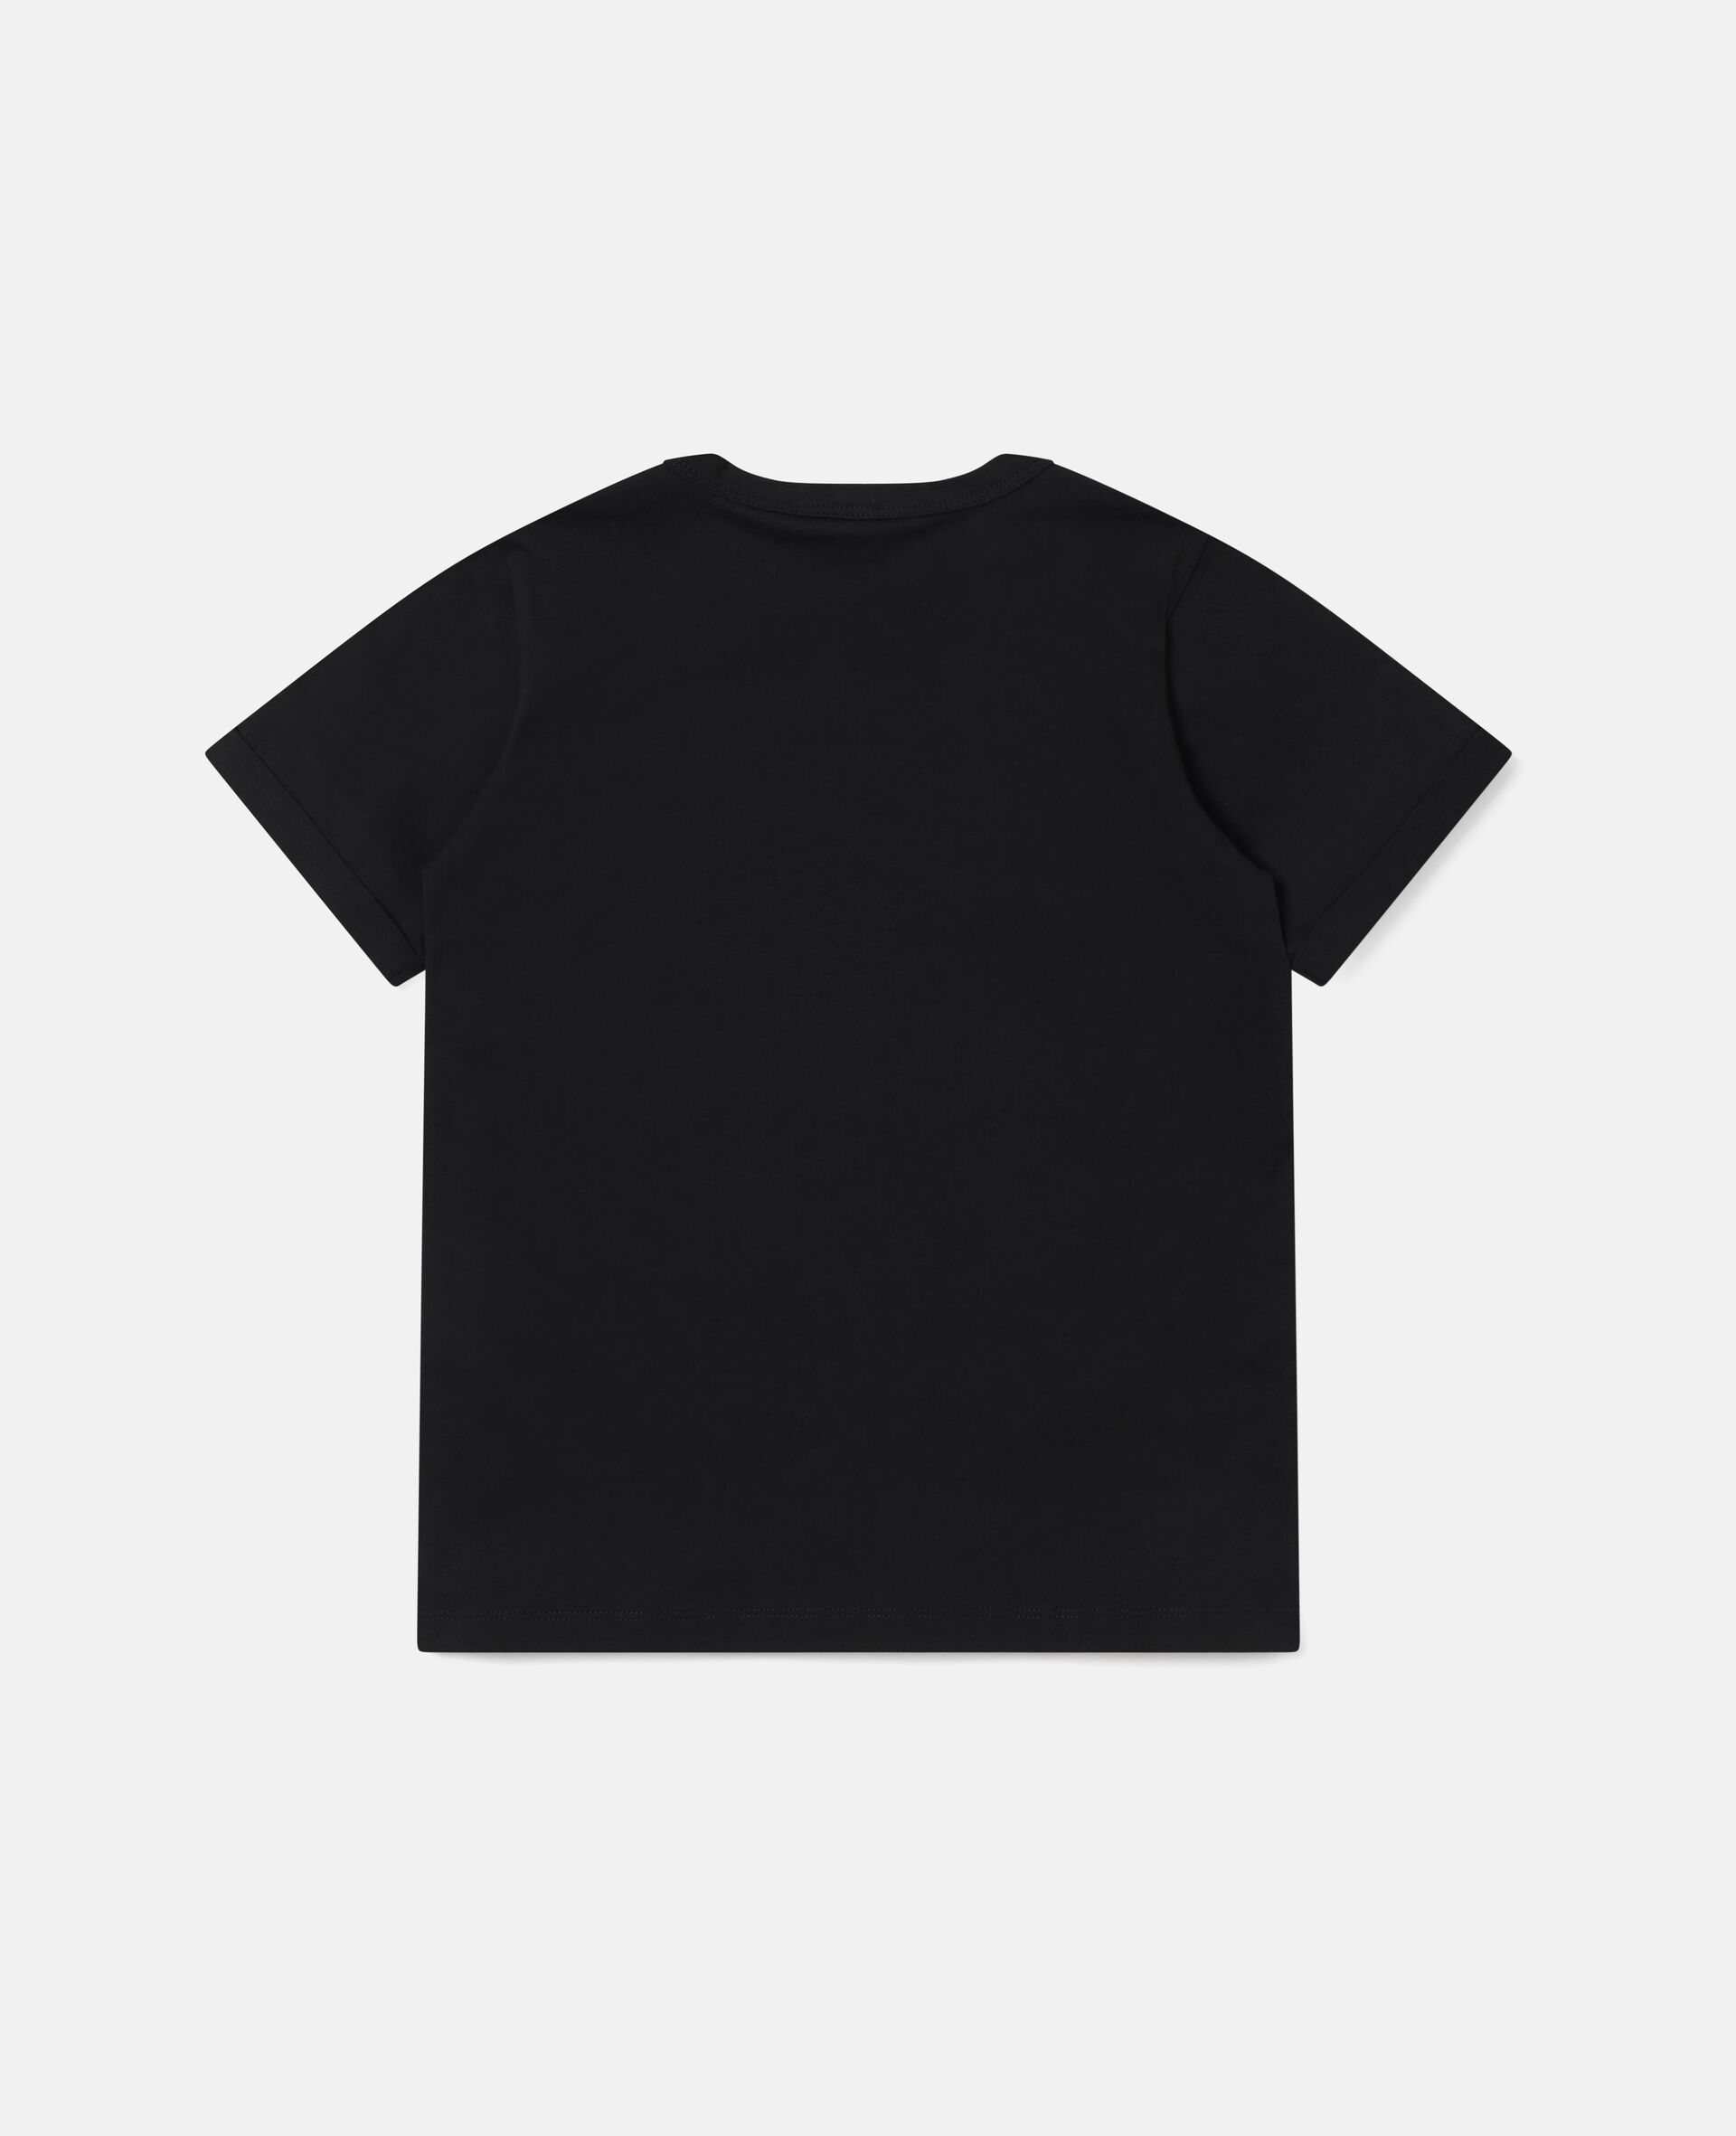 Spotty Flower Cotton T-shirt -Black-large image number 3